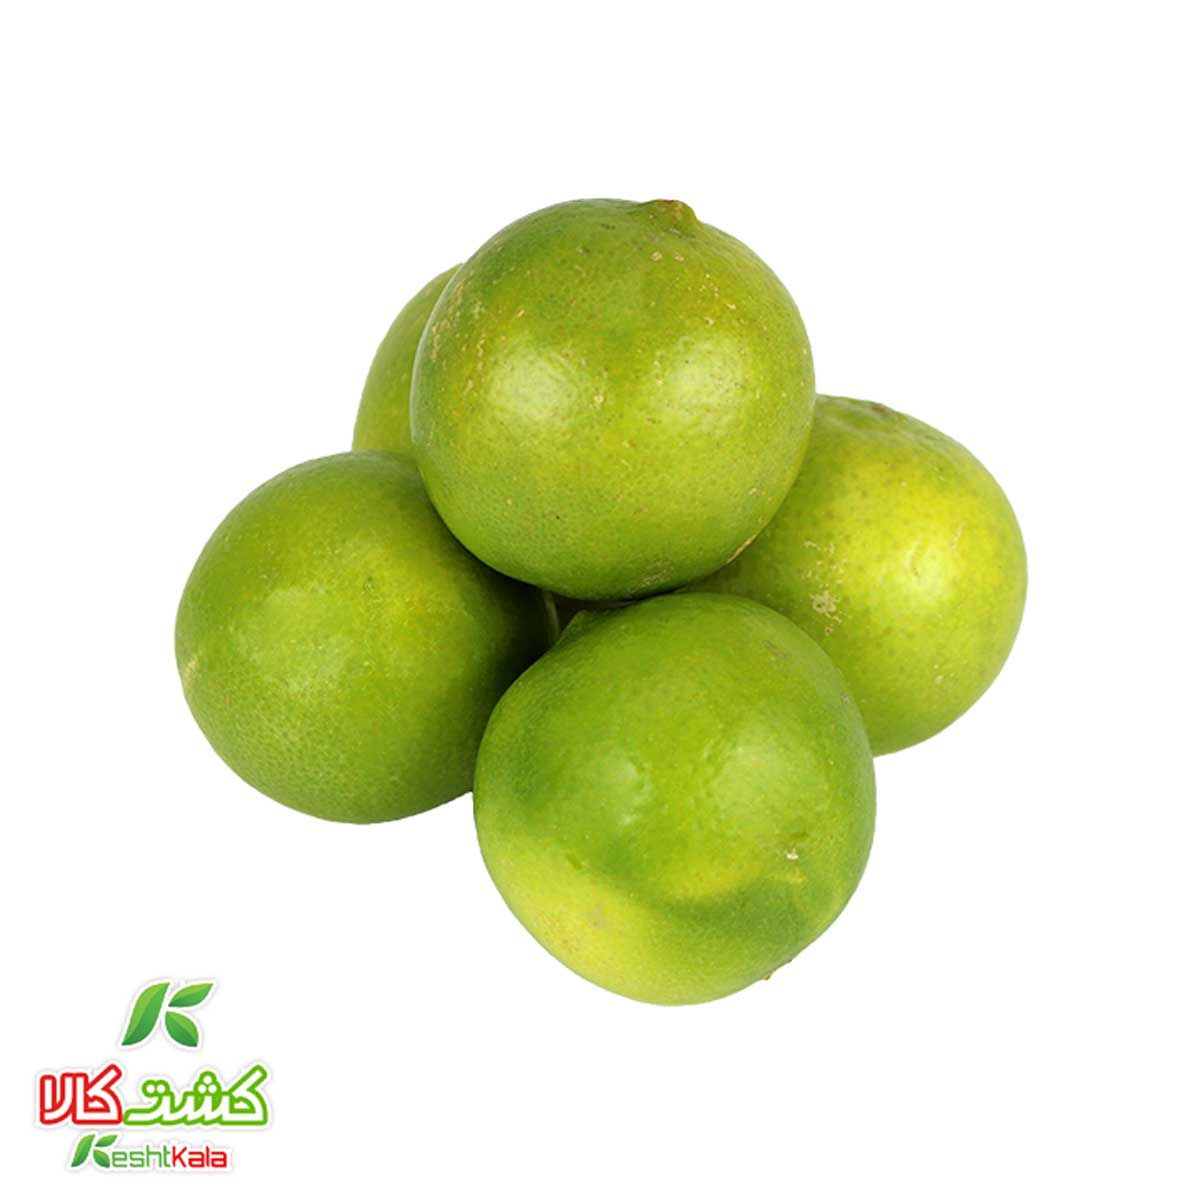 لیمو شیرین سبز کشت کالا کیسه ای 5 کیلوگرمی